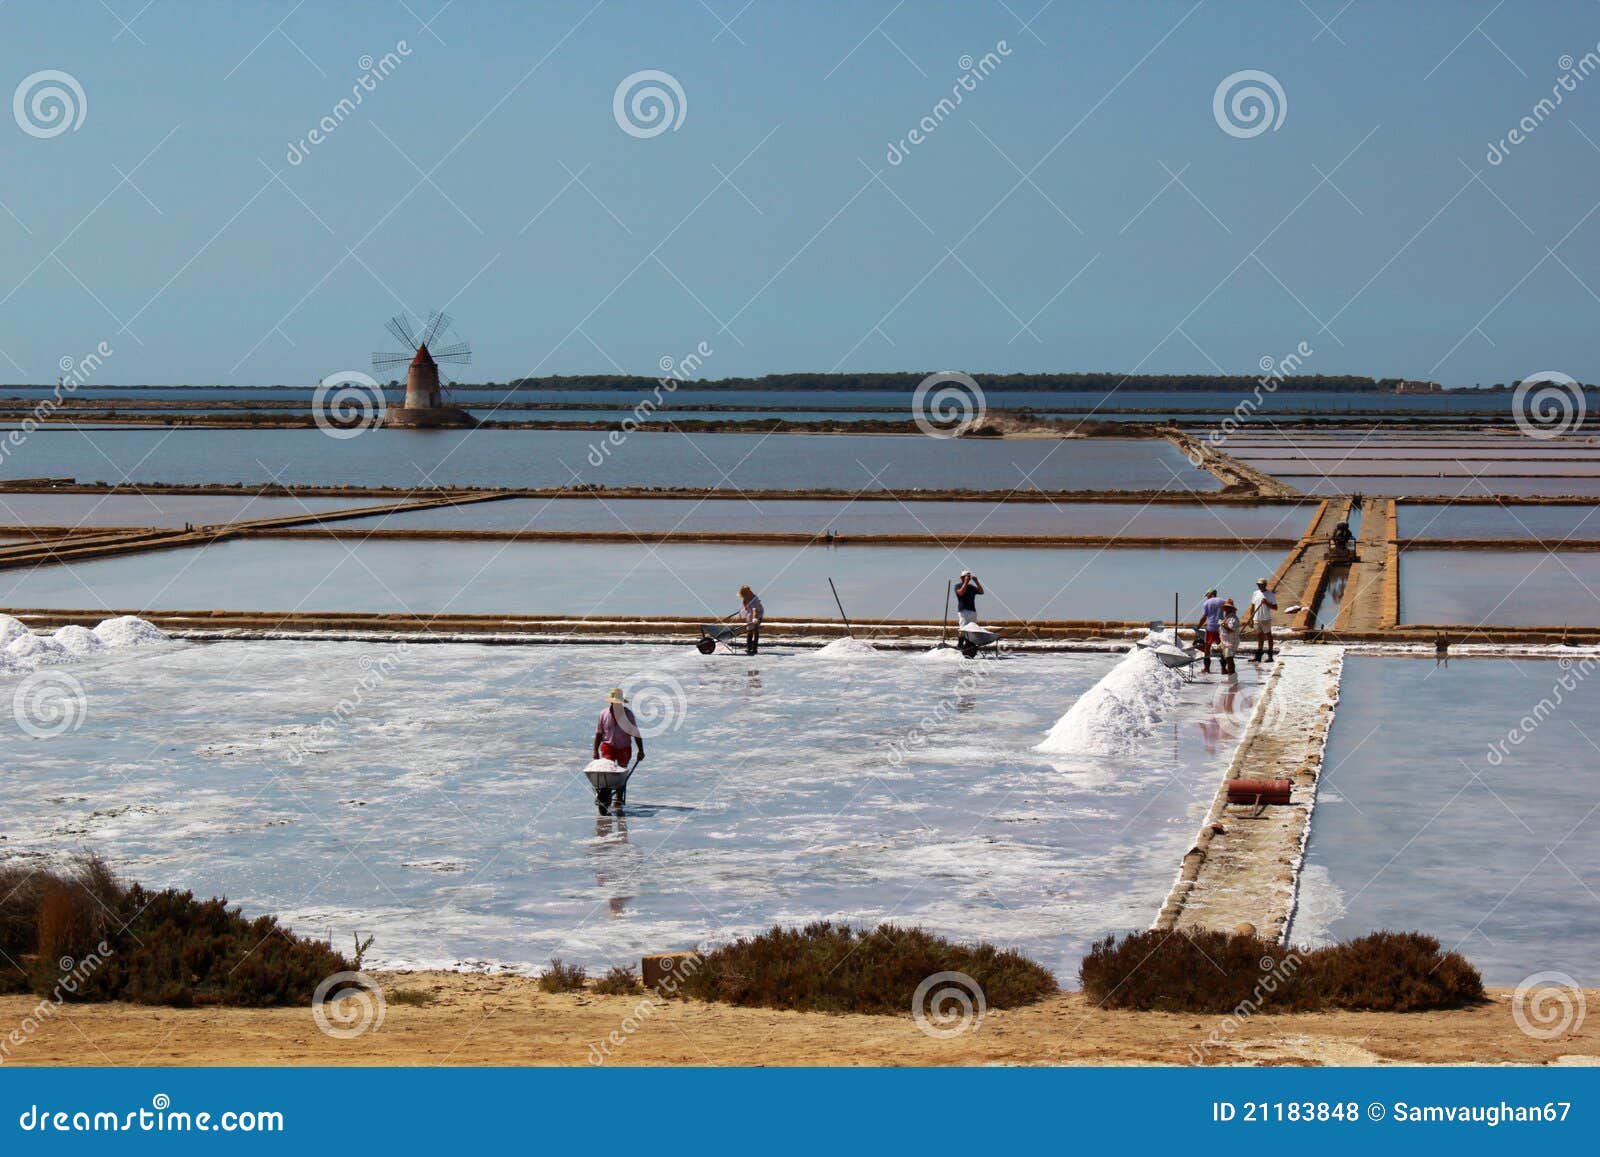 men working on the saltpans in mozia in sicily